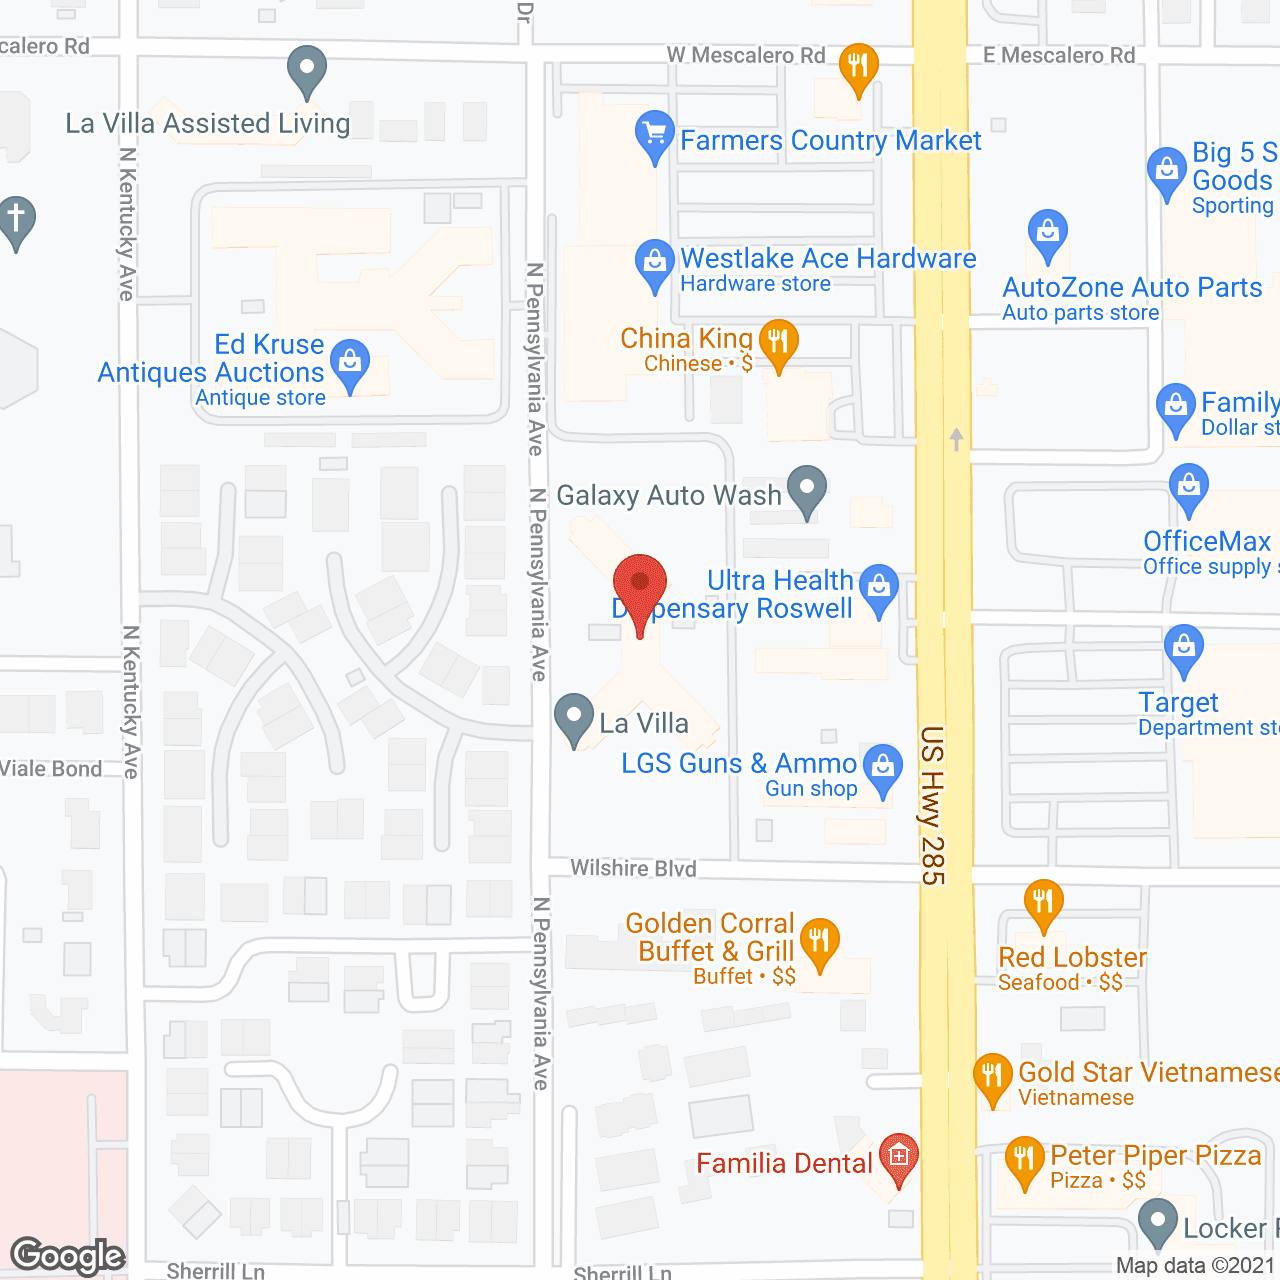 La Villa in google map